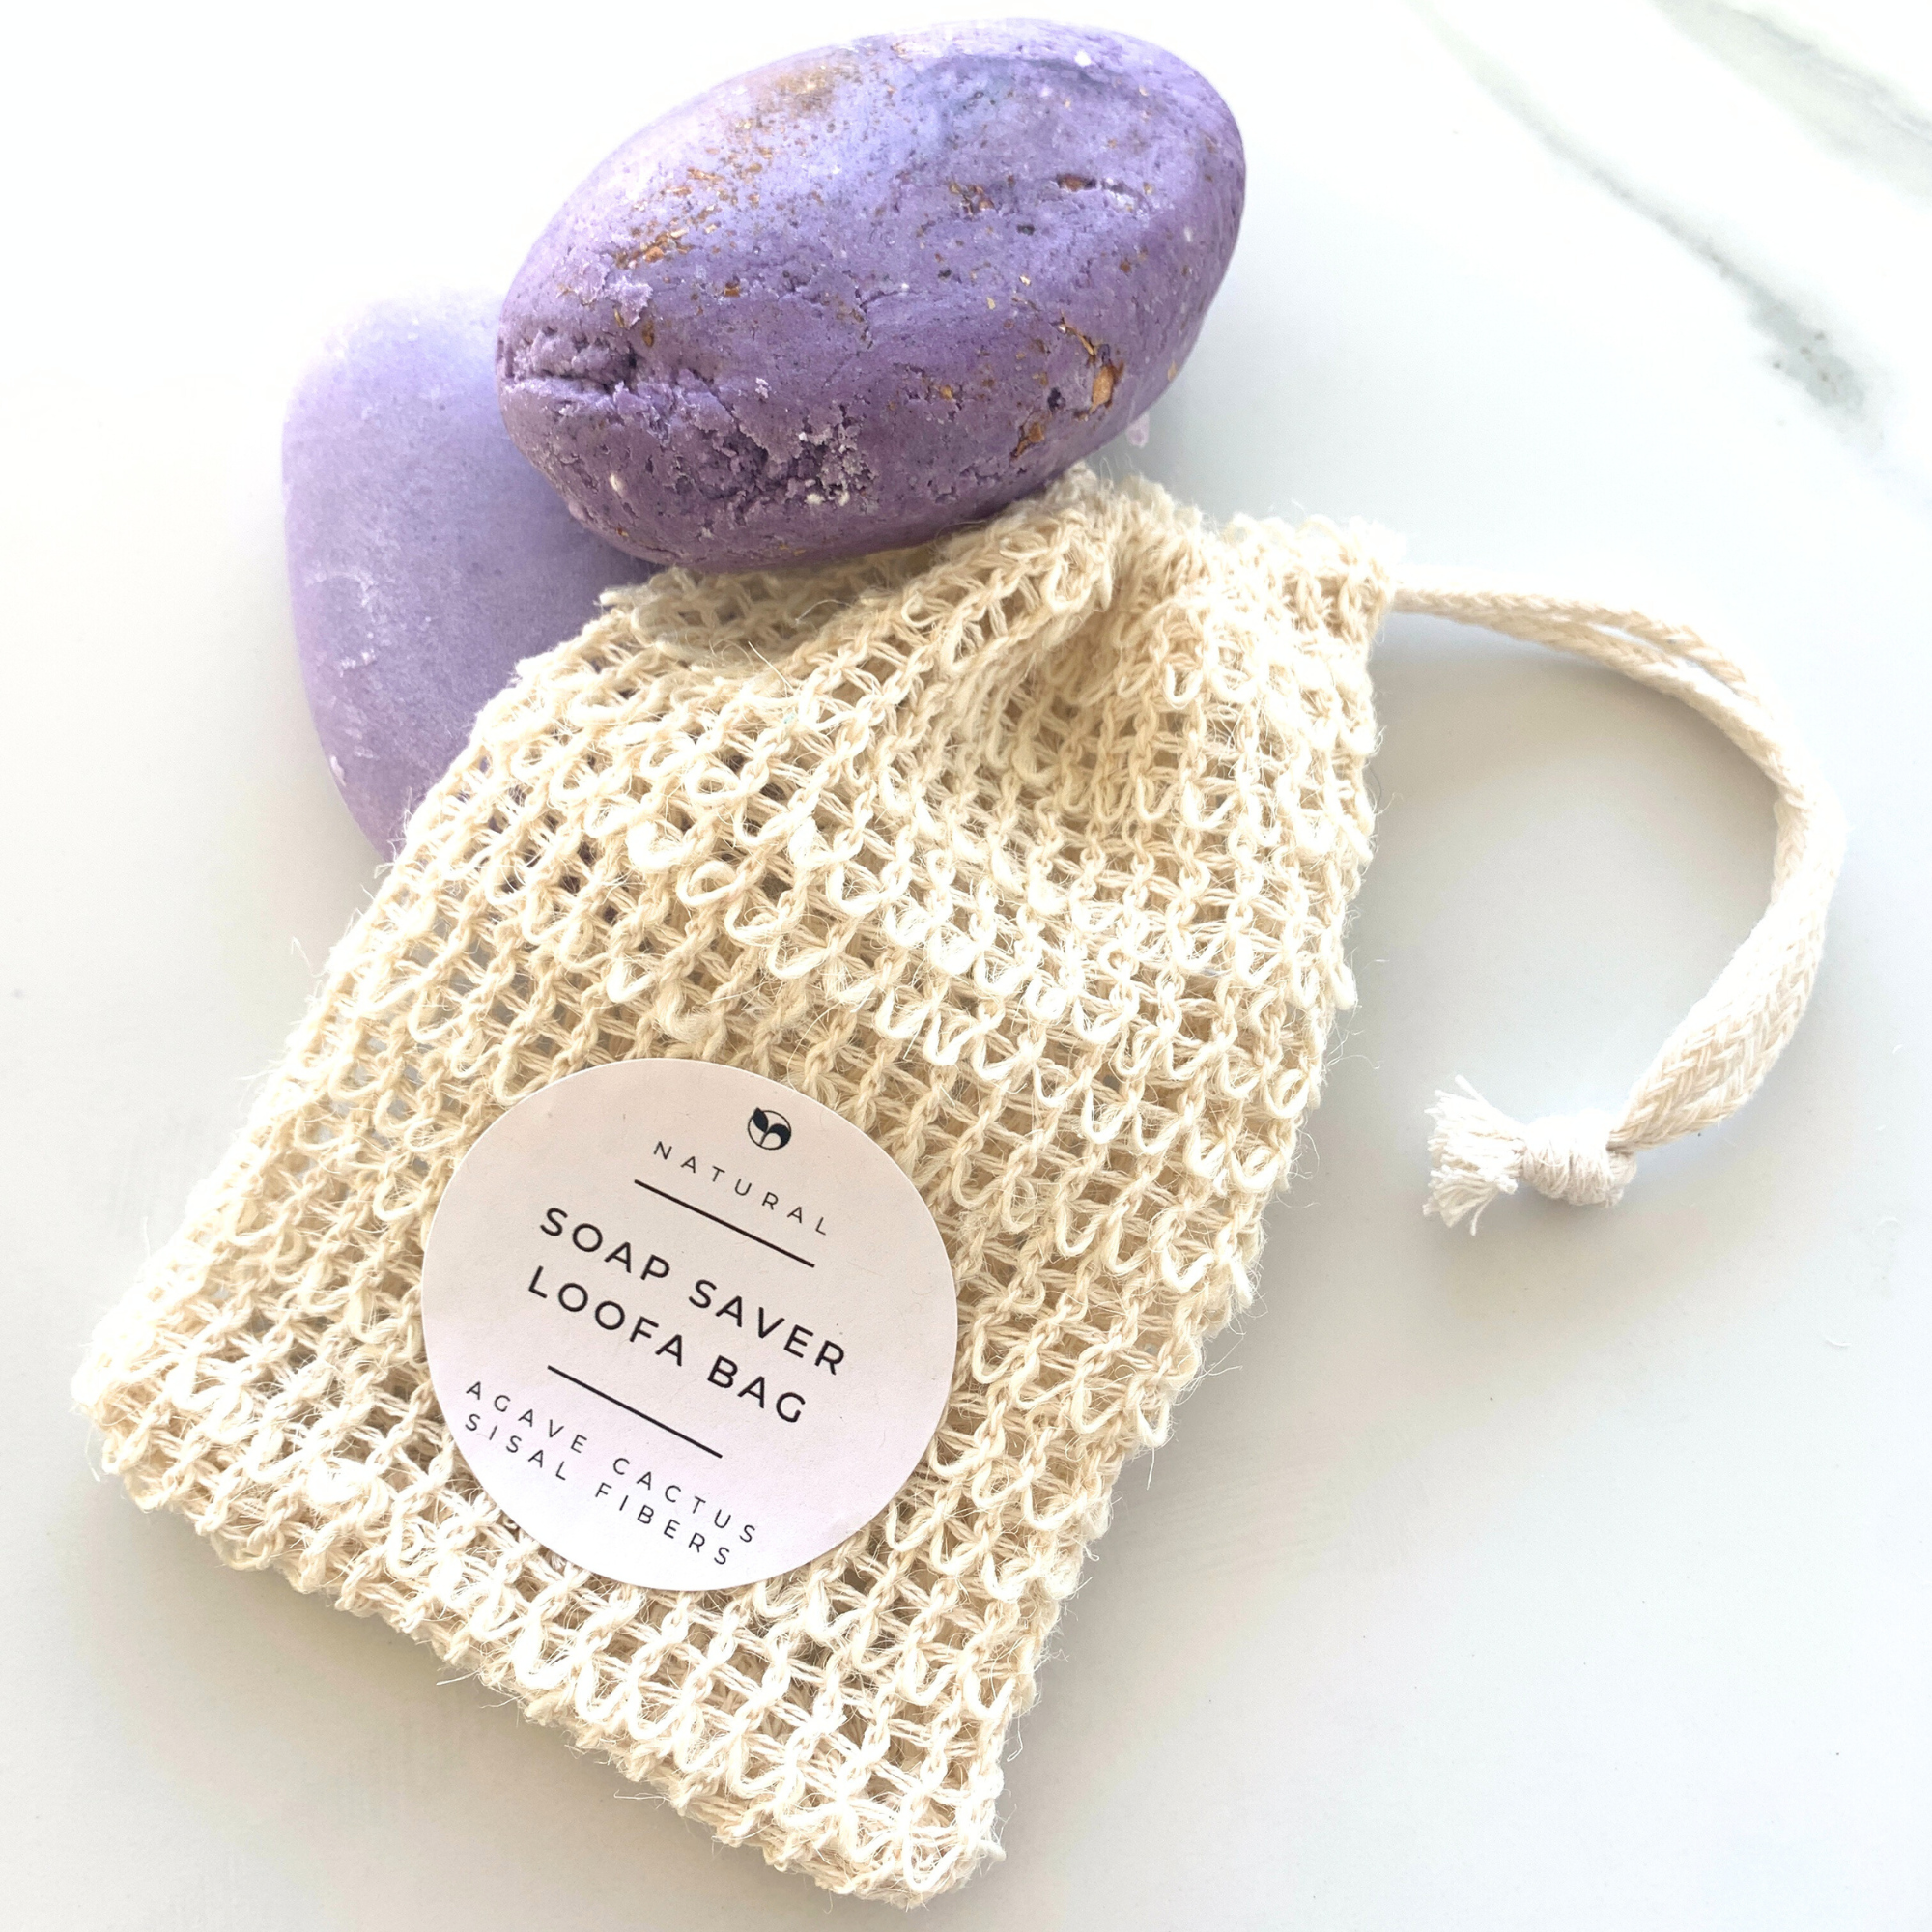 Soap Saver Loofa Bag made from 100% natural sisal fibers – Scentcerae